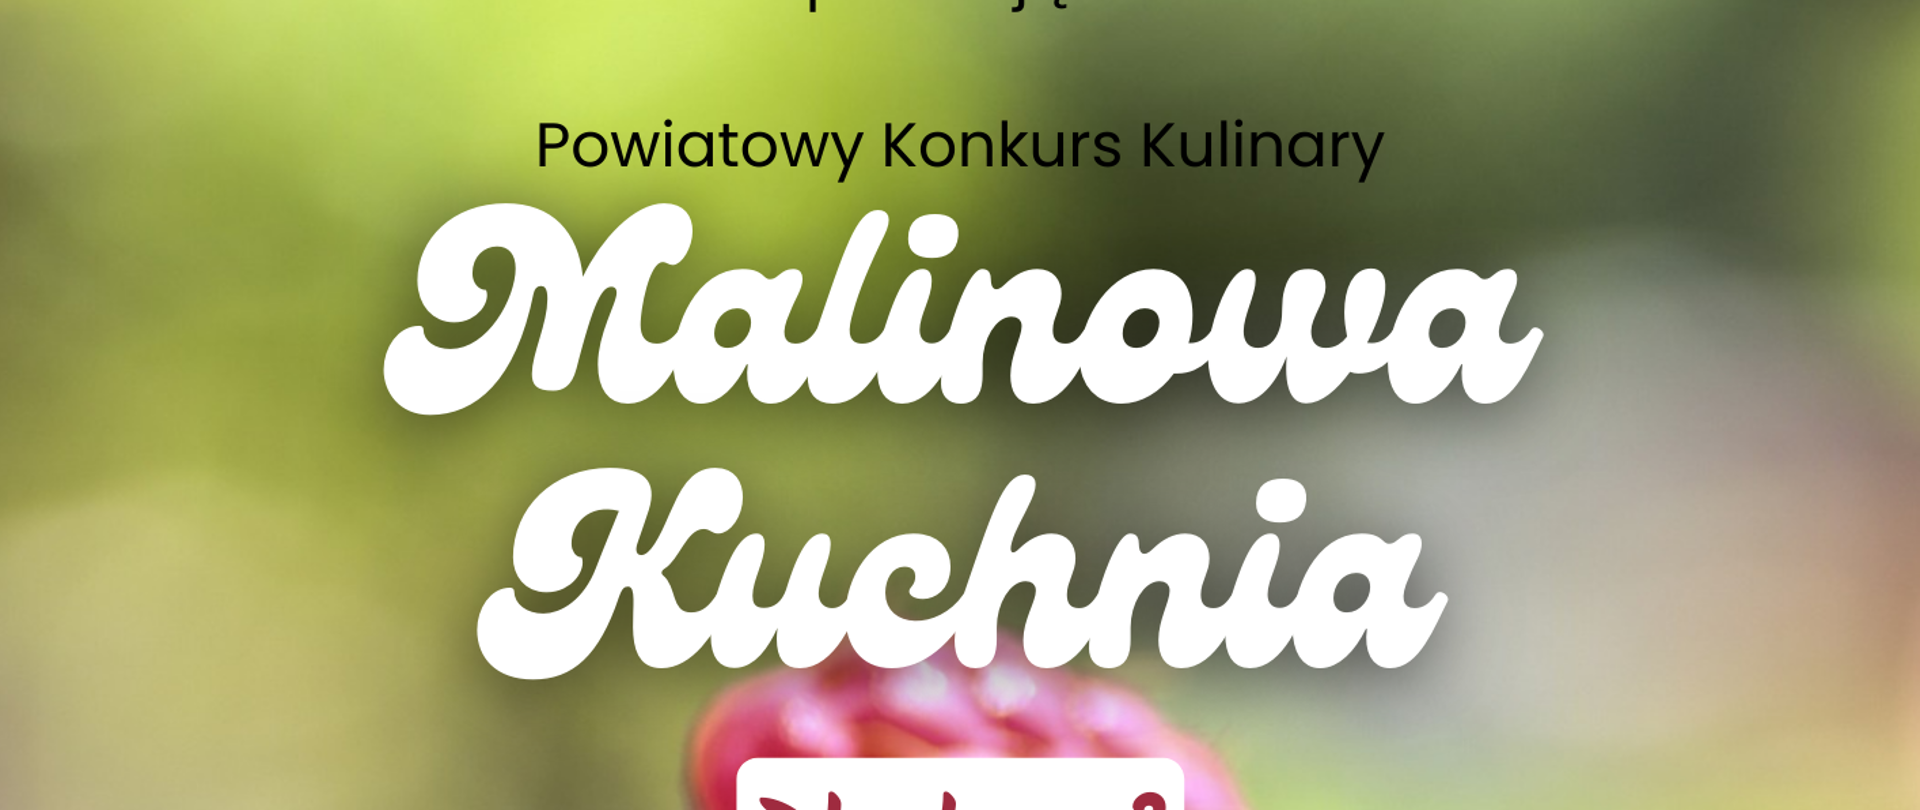 Powiatowy Konkurs Kulinarny - MALINOWA KUCHNIA - plakat